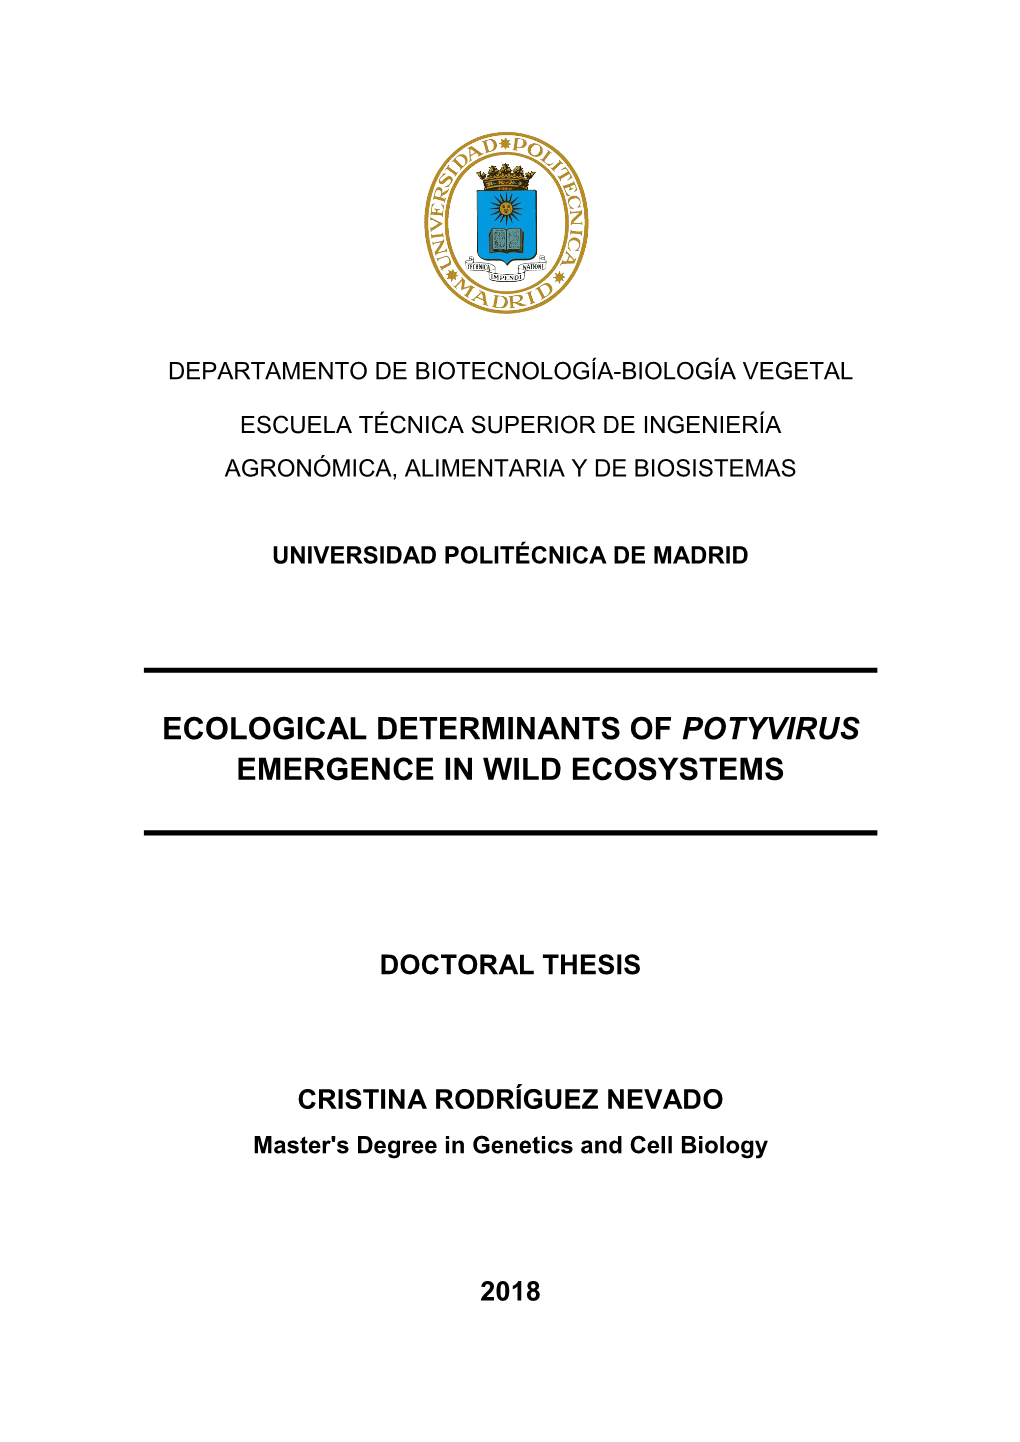 Ecological Determinants of Potyvirus Emergence in Wild Ecosystems